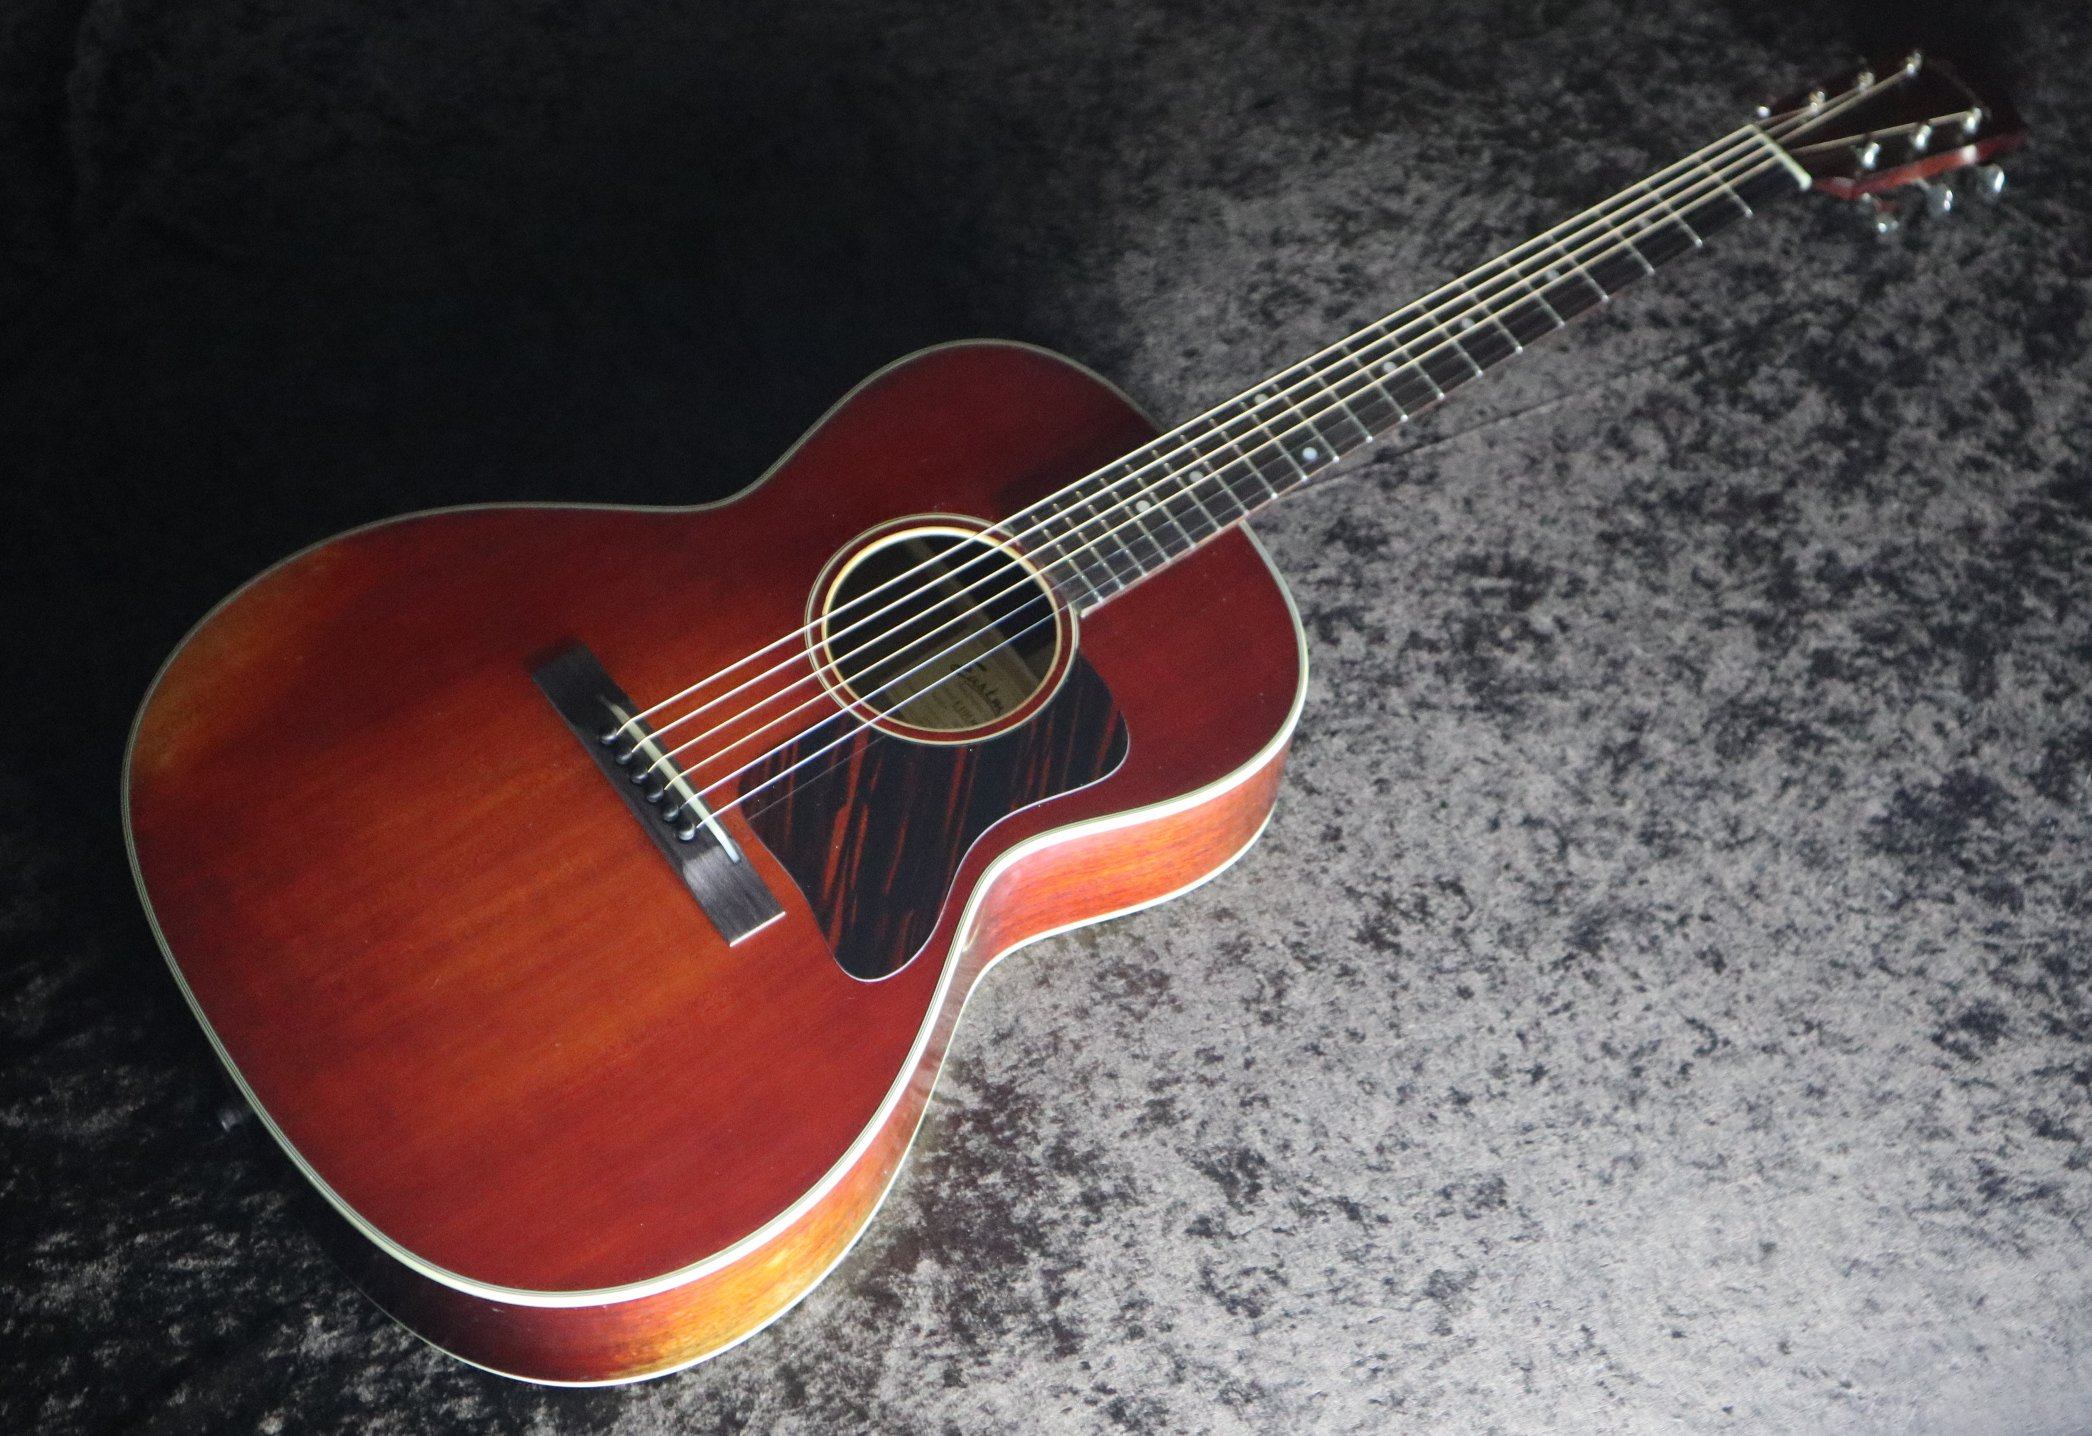 Eastman E10 OOSS/v ANTIQUE CLASSIC, Acoustic Guitar for sale at Richards Guitars.